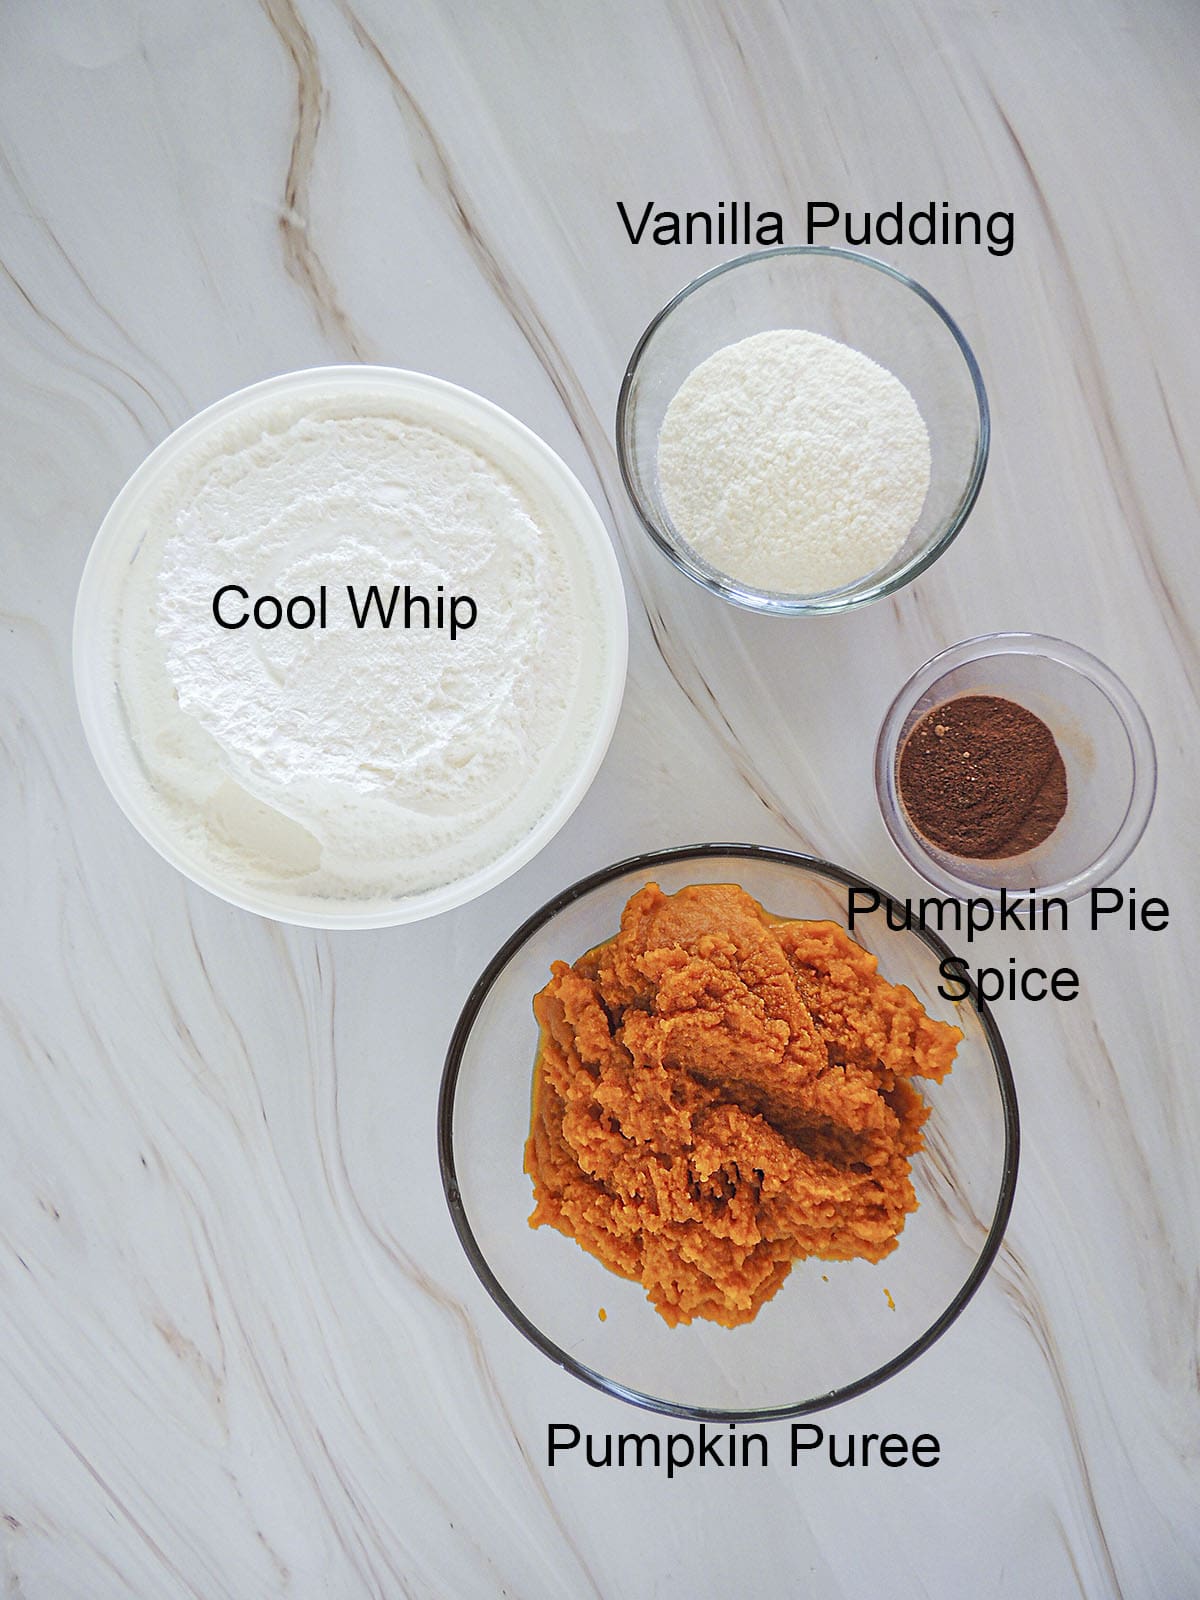 Ingredients for the pumpkin fluff. Cool whip, vanilla pudding powder, pumpkin pie spice and pumpkin puree.